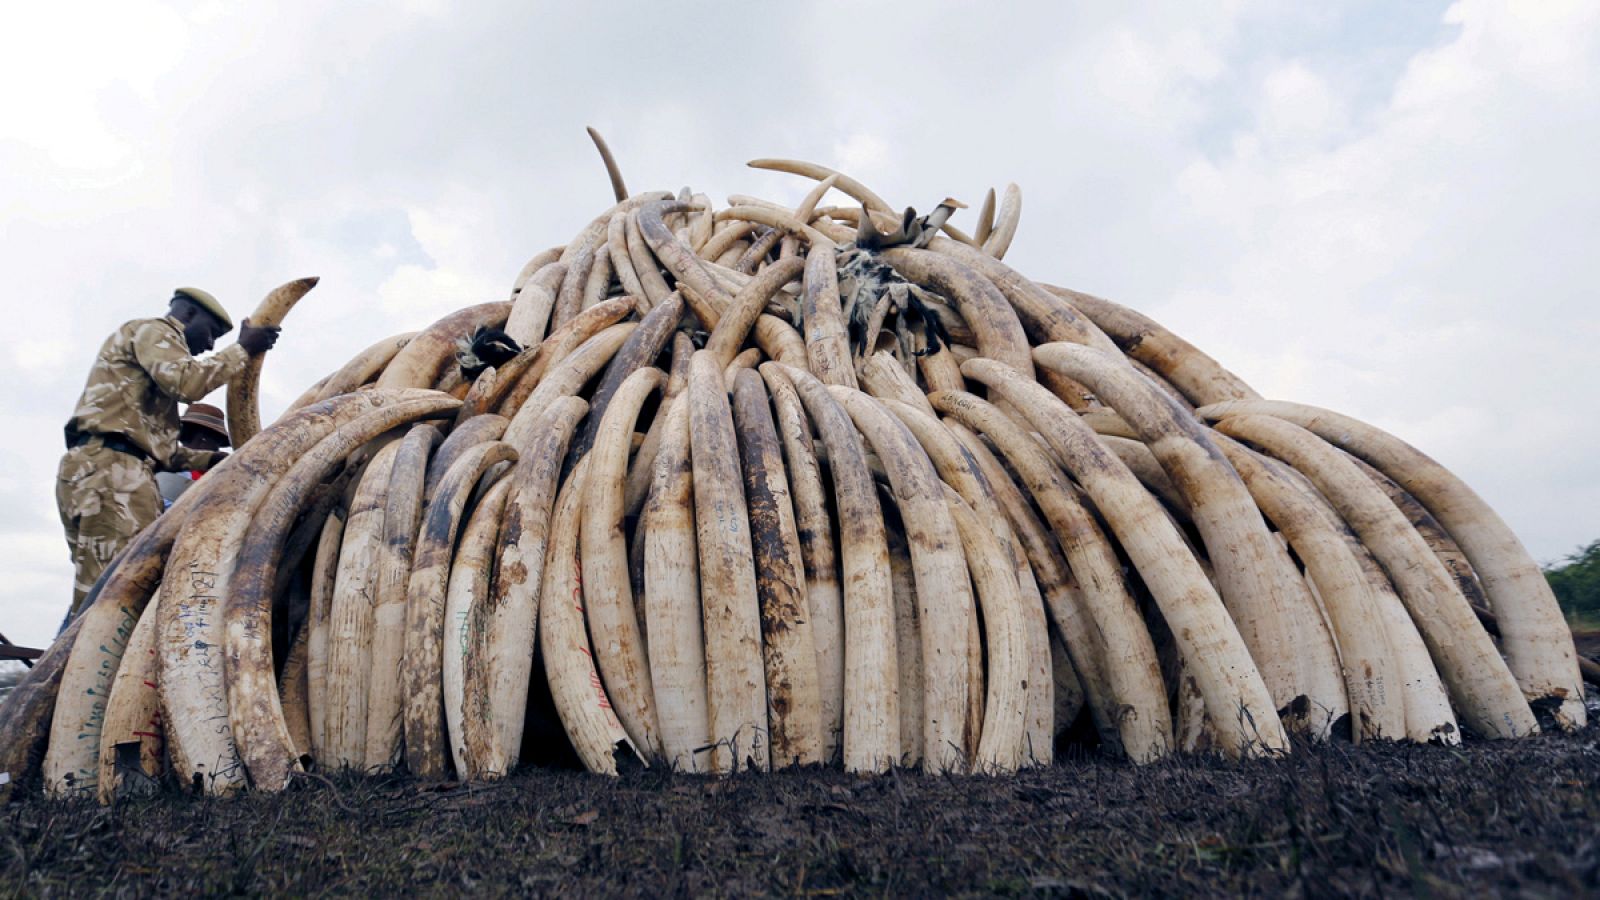 Colmillos de marfil que han sido confiscados en Kenia, apilados antes de ser quemados.